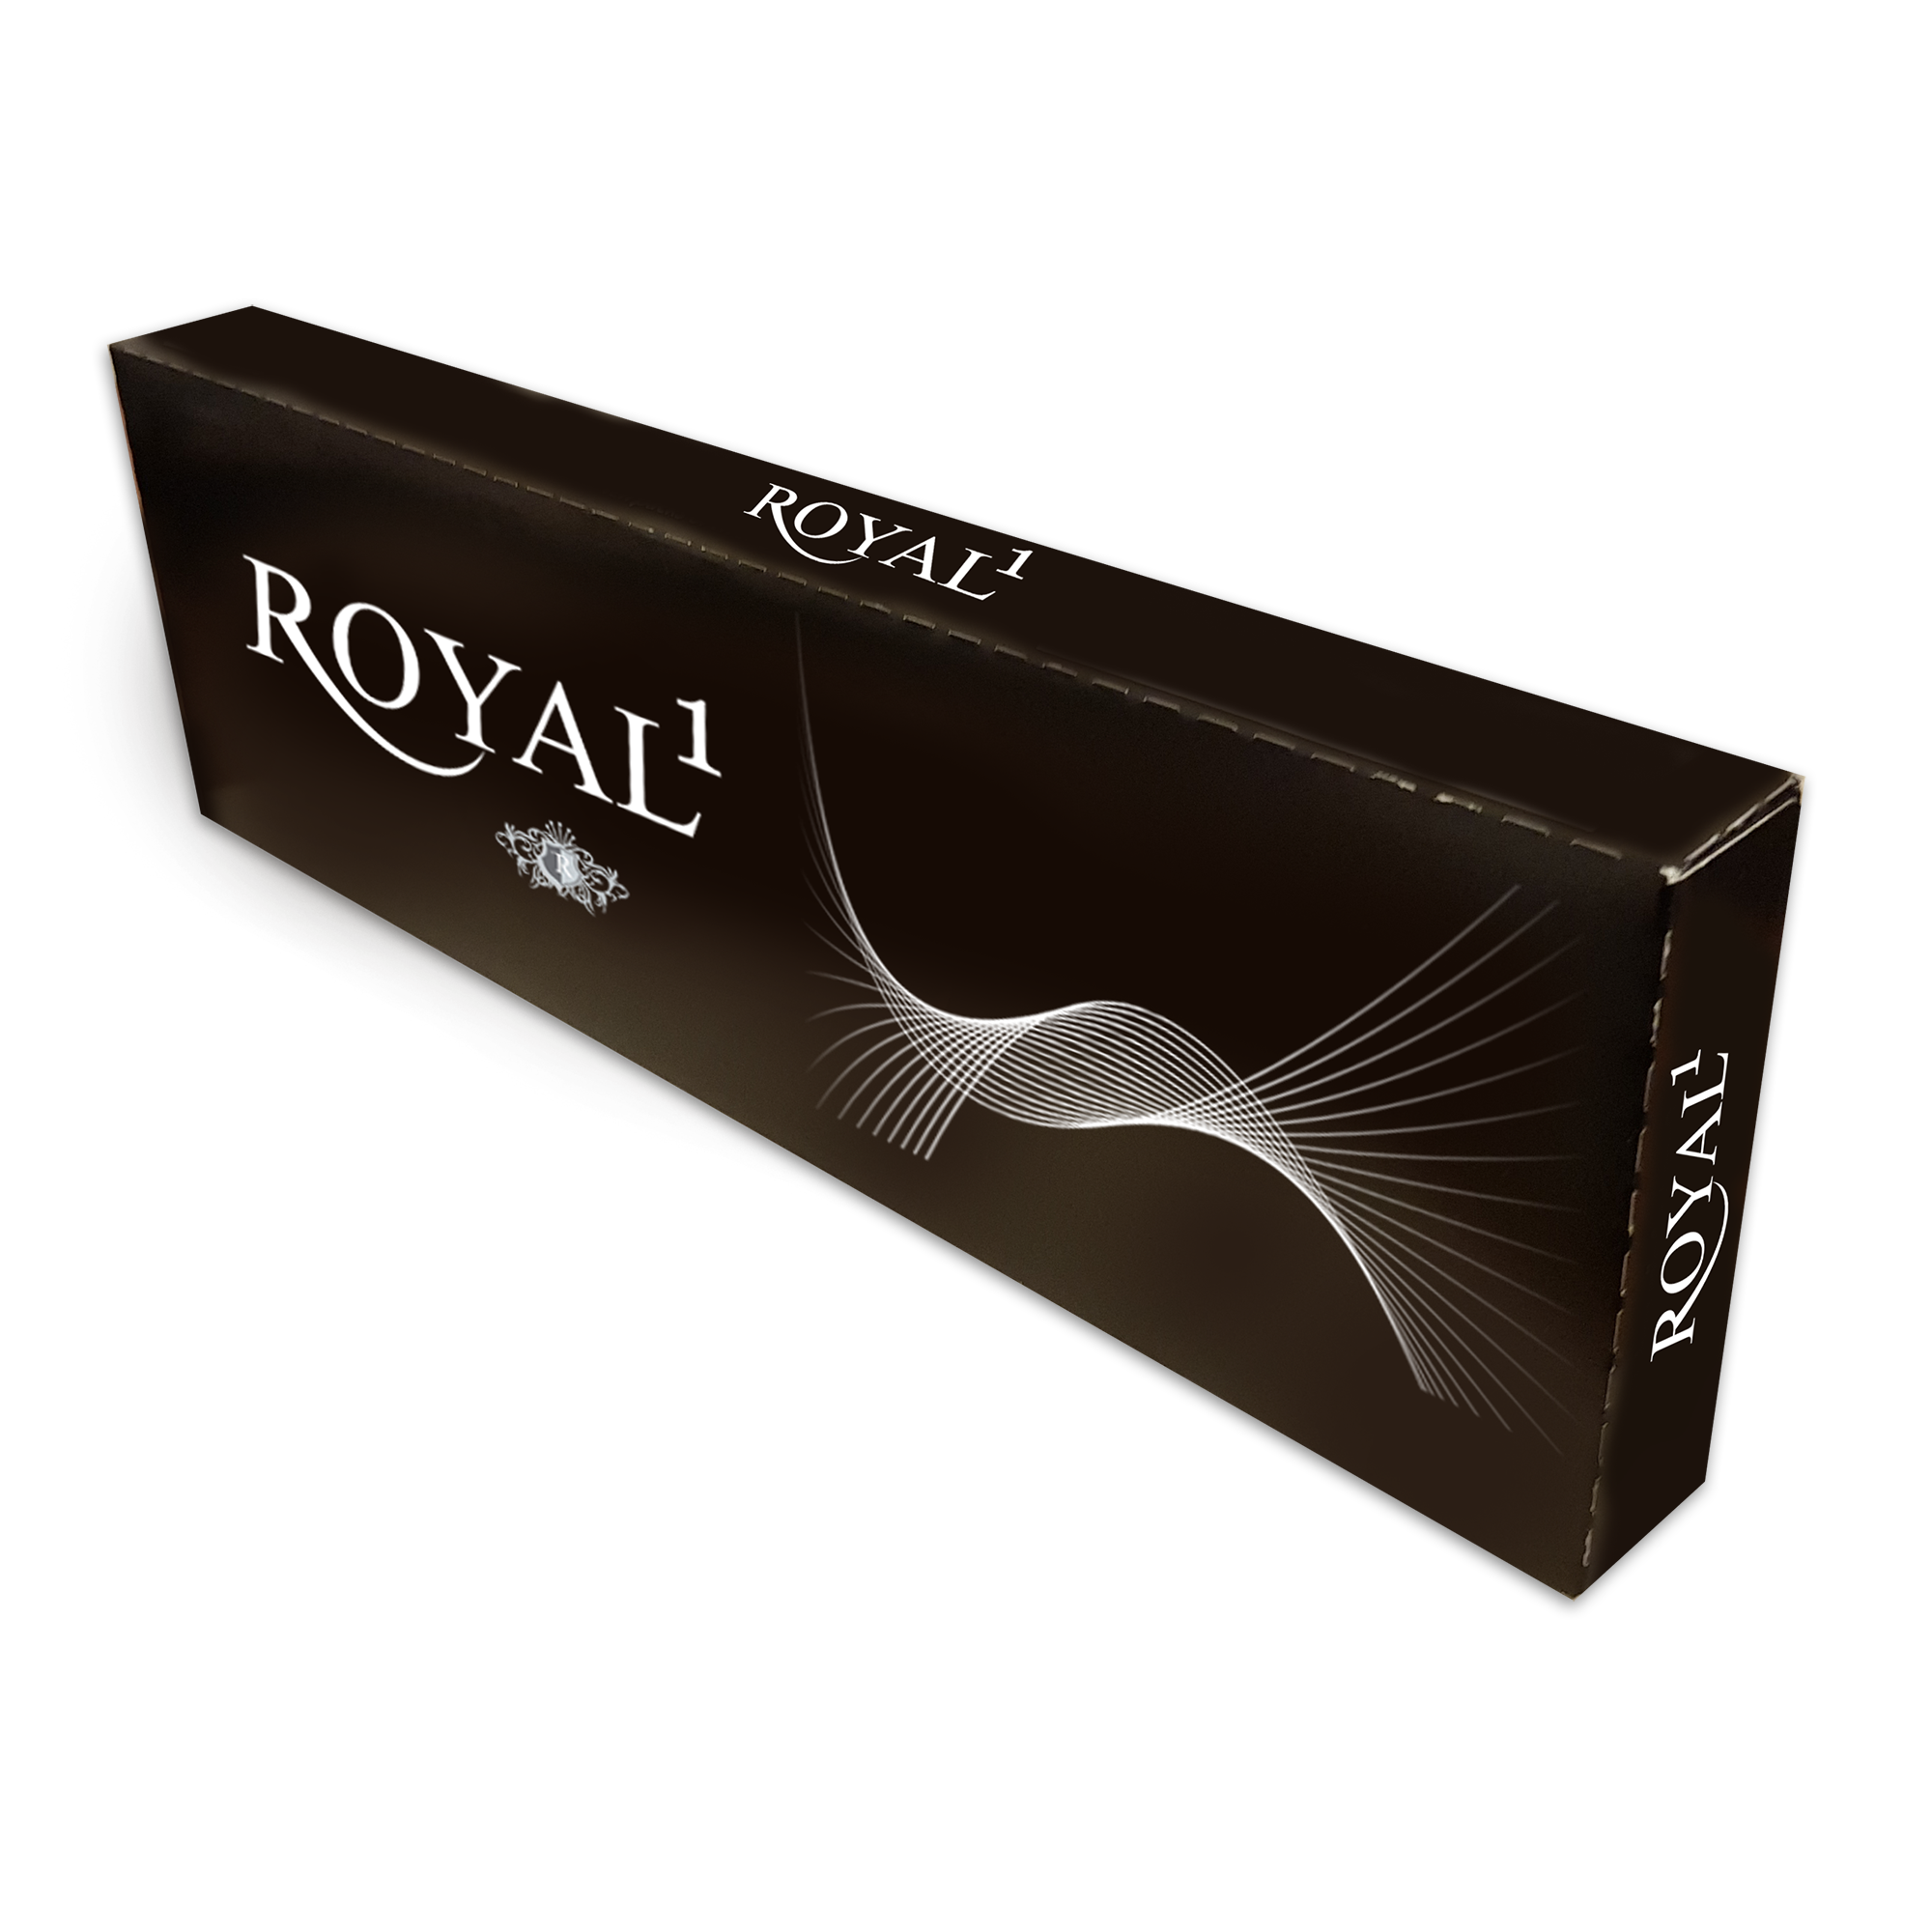  Royal1 Black box 